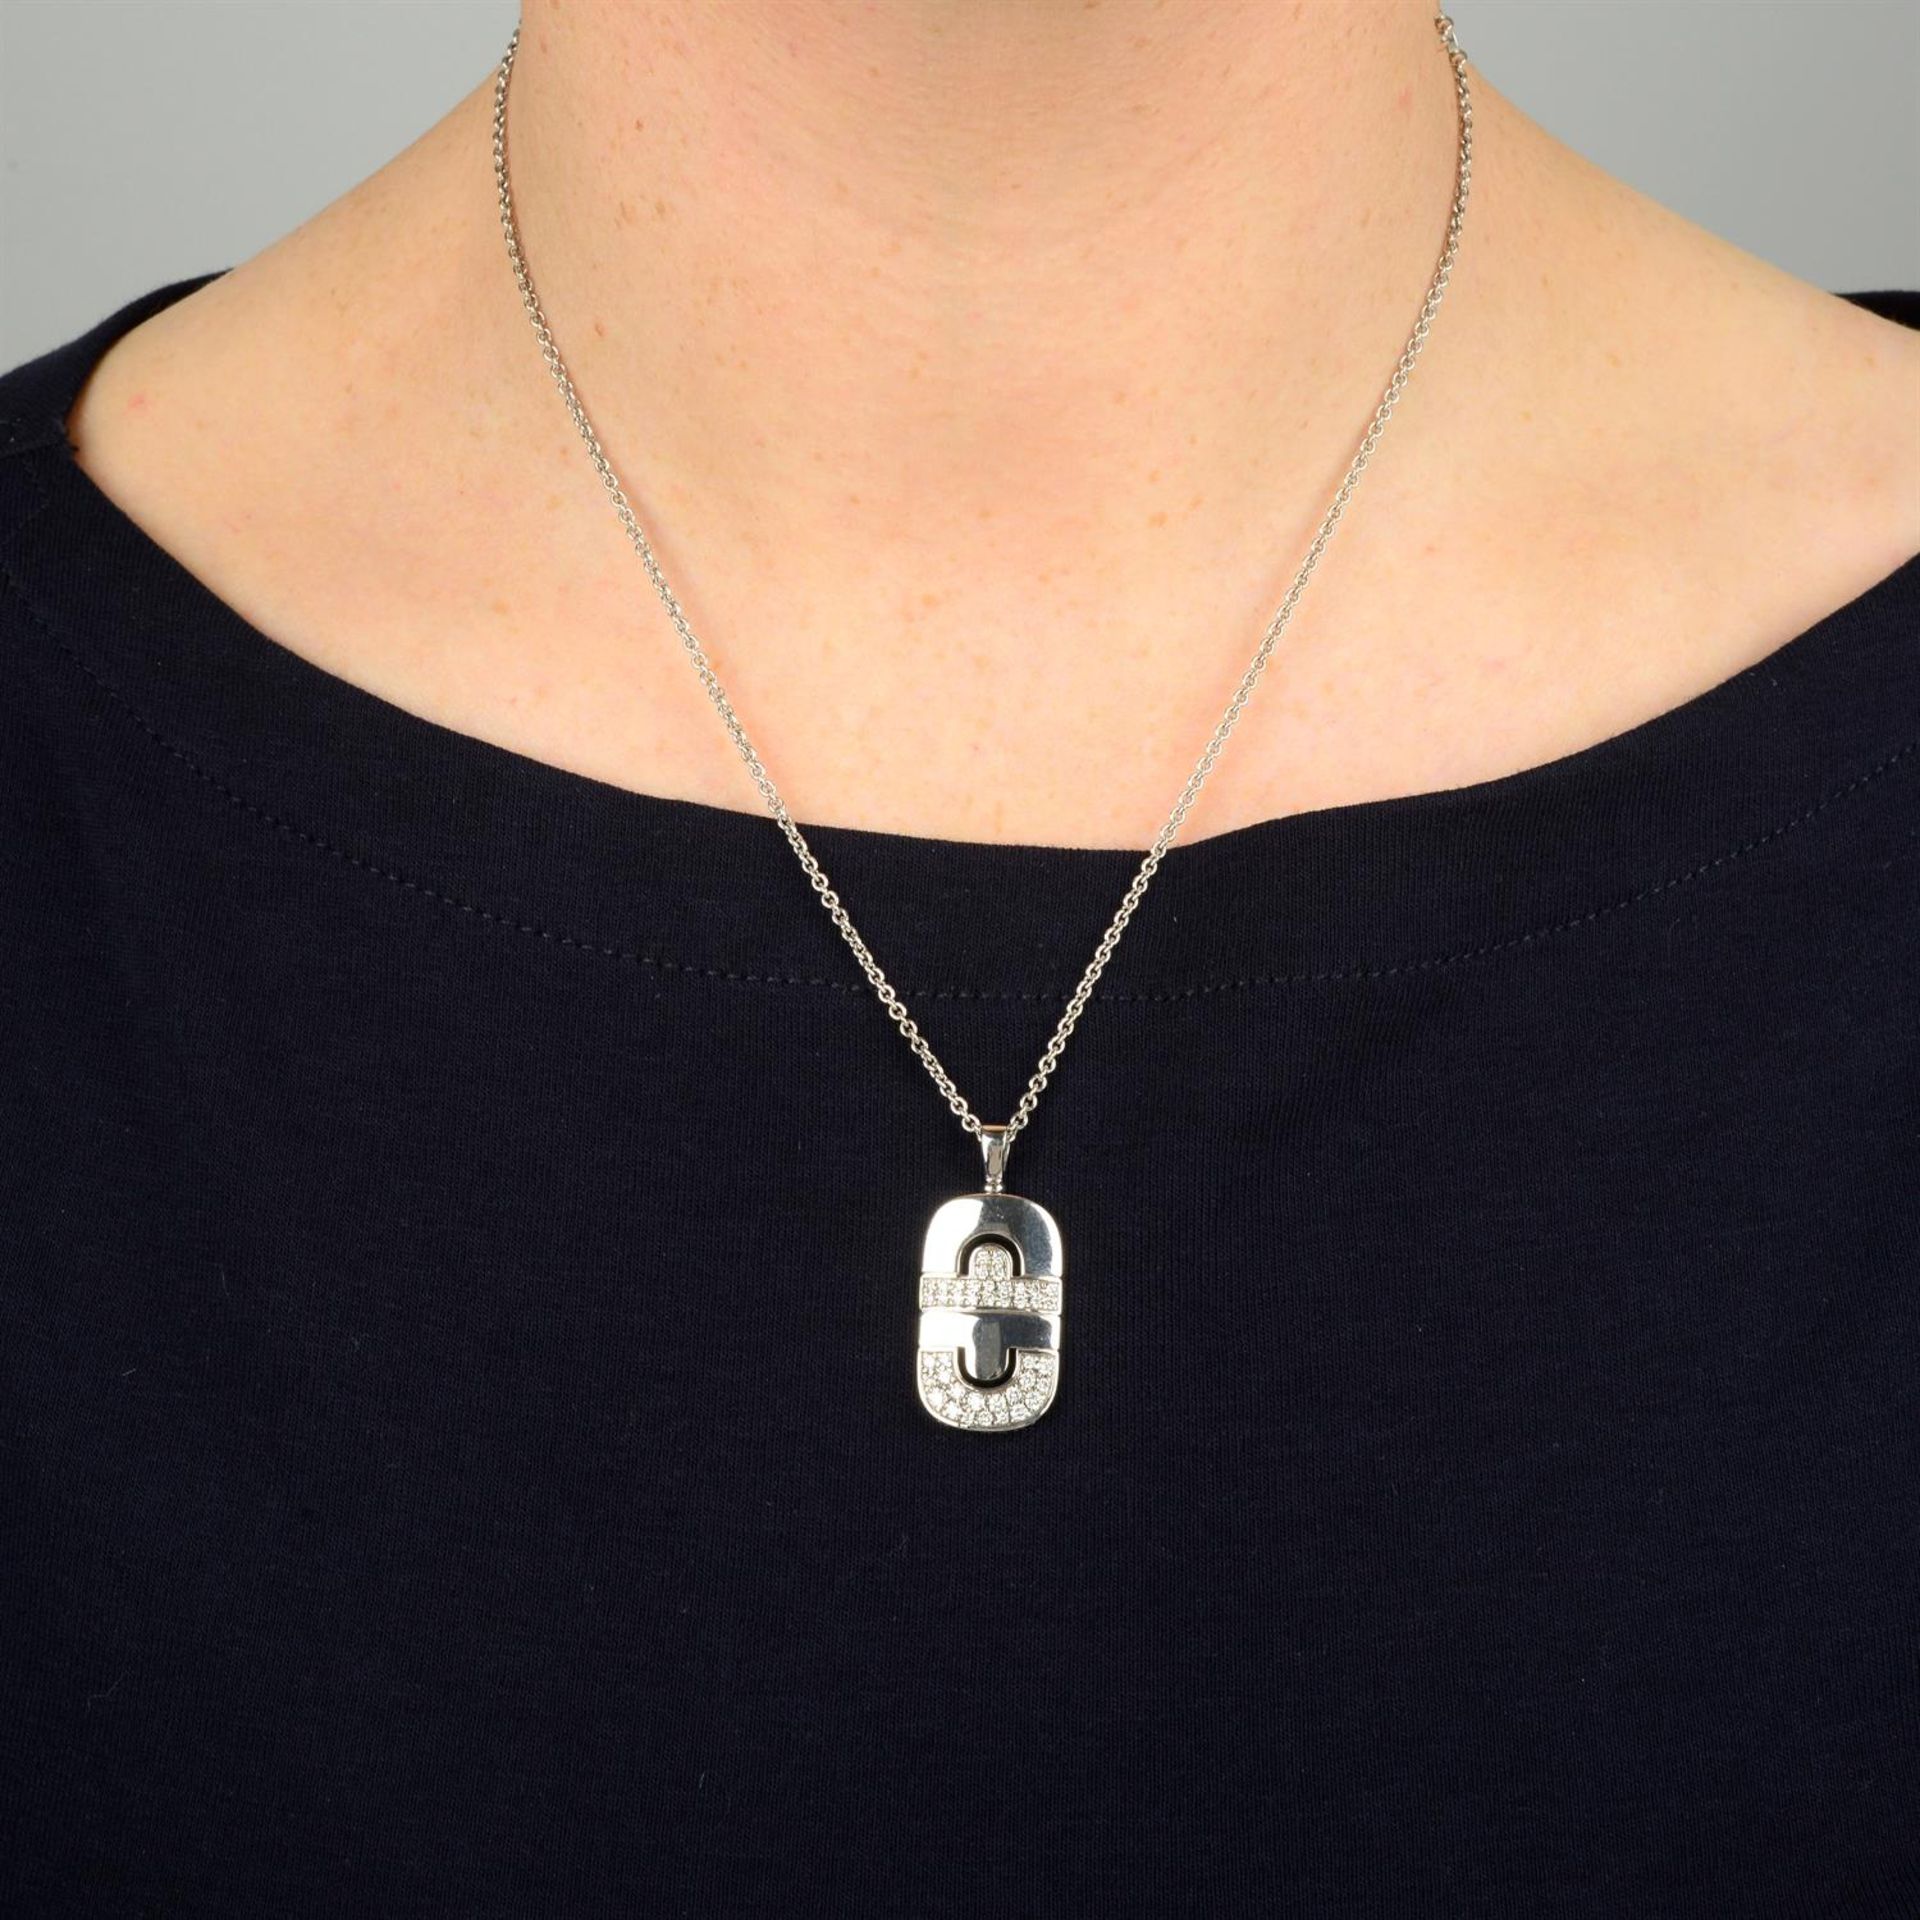 An 18ct gold pavé-set diamond 'Parentesi' pendant, with chain, by Bulgari. - Image 5 of 5